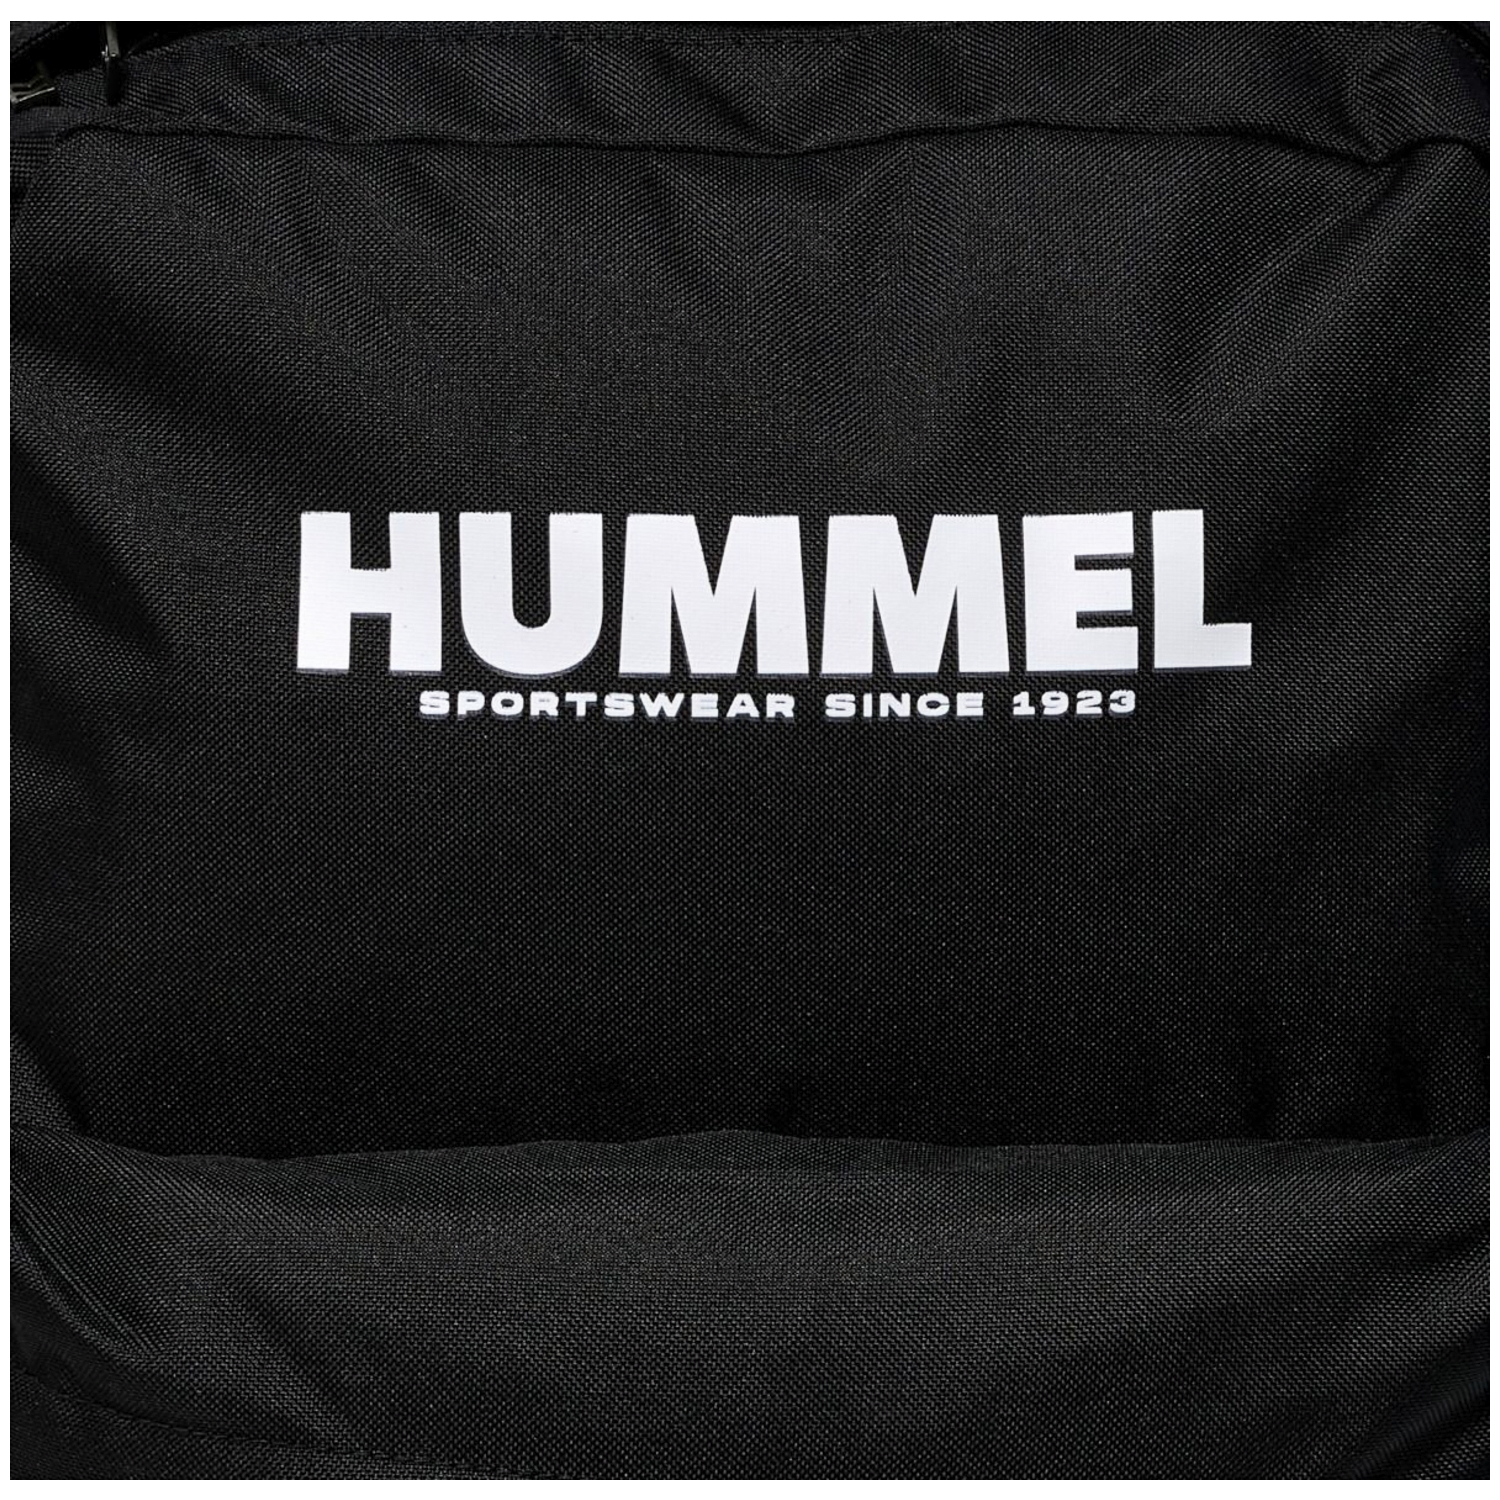 Hummel Legacy Core Daybag